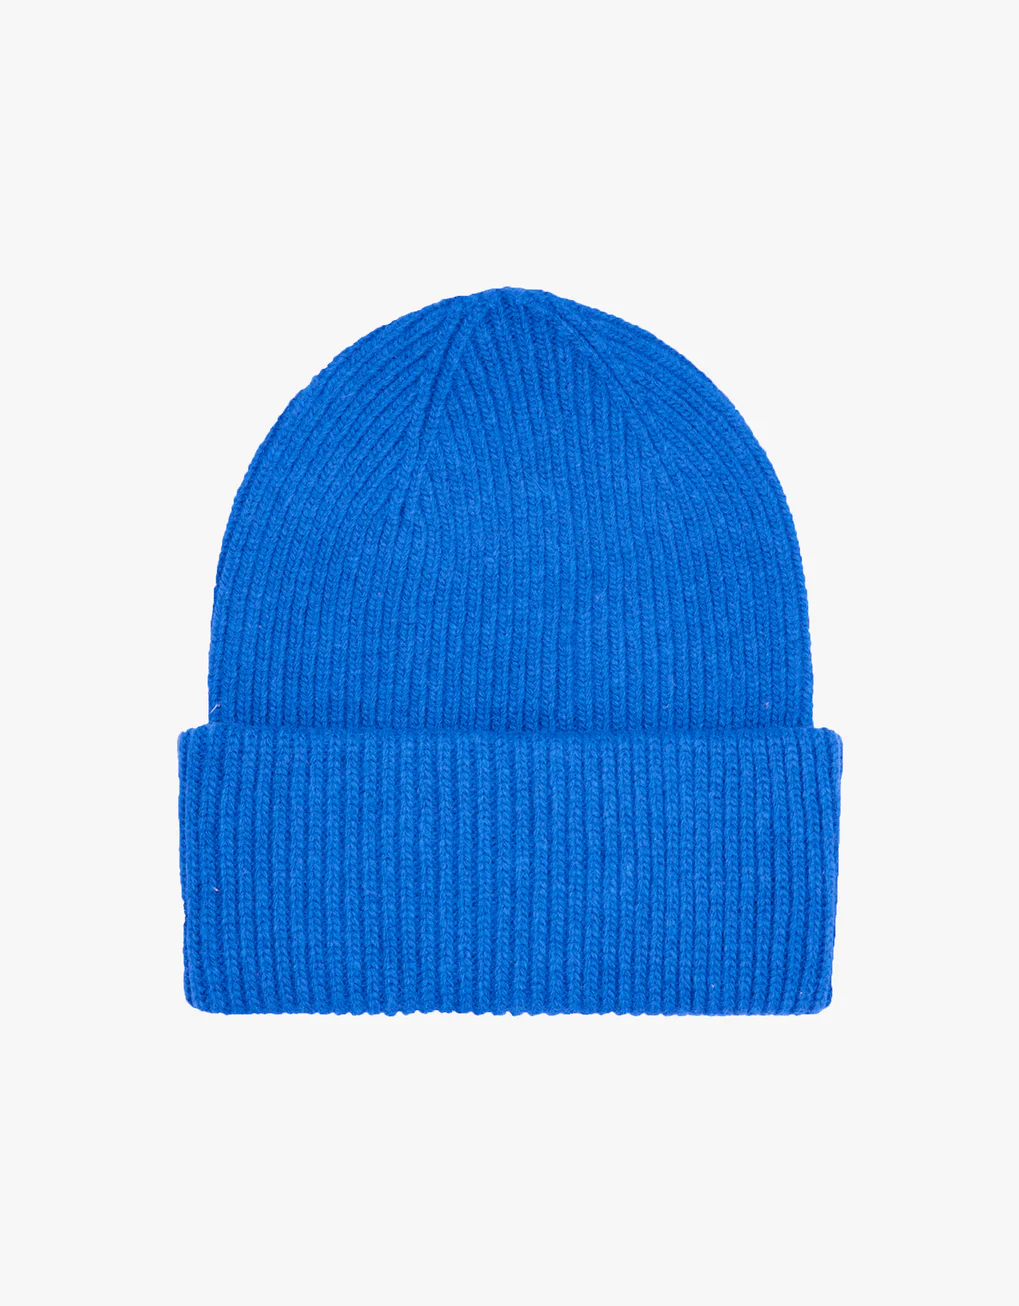 Colorful Standard - MERINO WOOL HAT - PACIFIC BLUE